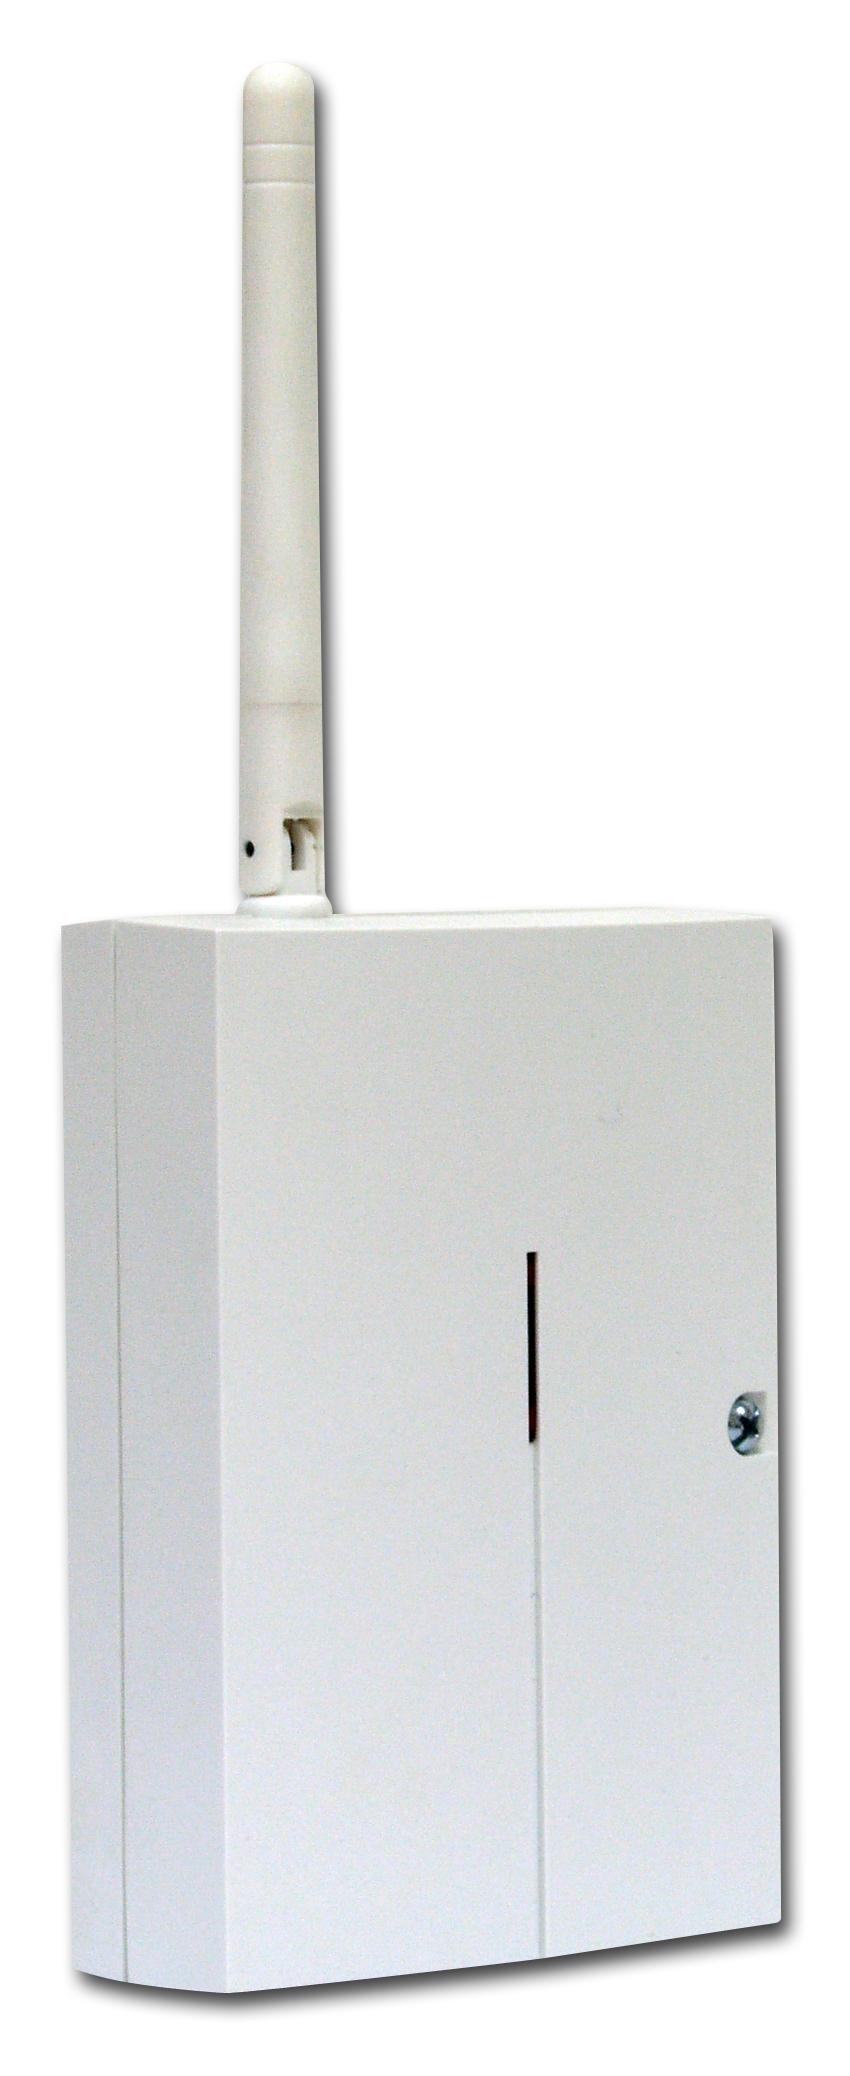 4060 GSM module GD04 Heat pump controller RVS61.843/101 + operating unit AVS 37.294/709 + Cable AVS82.